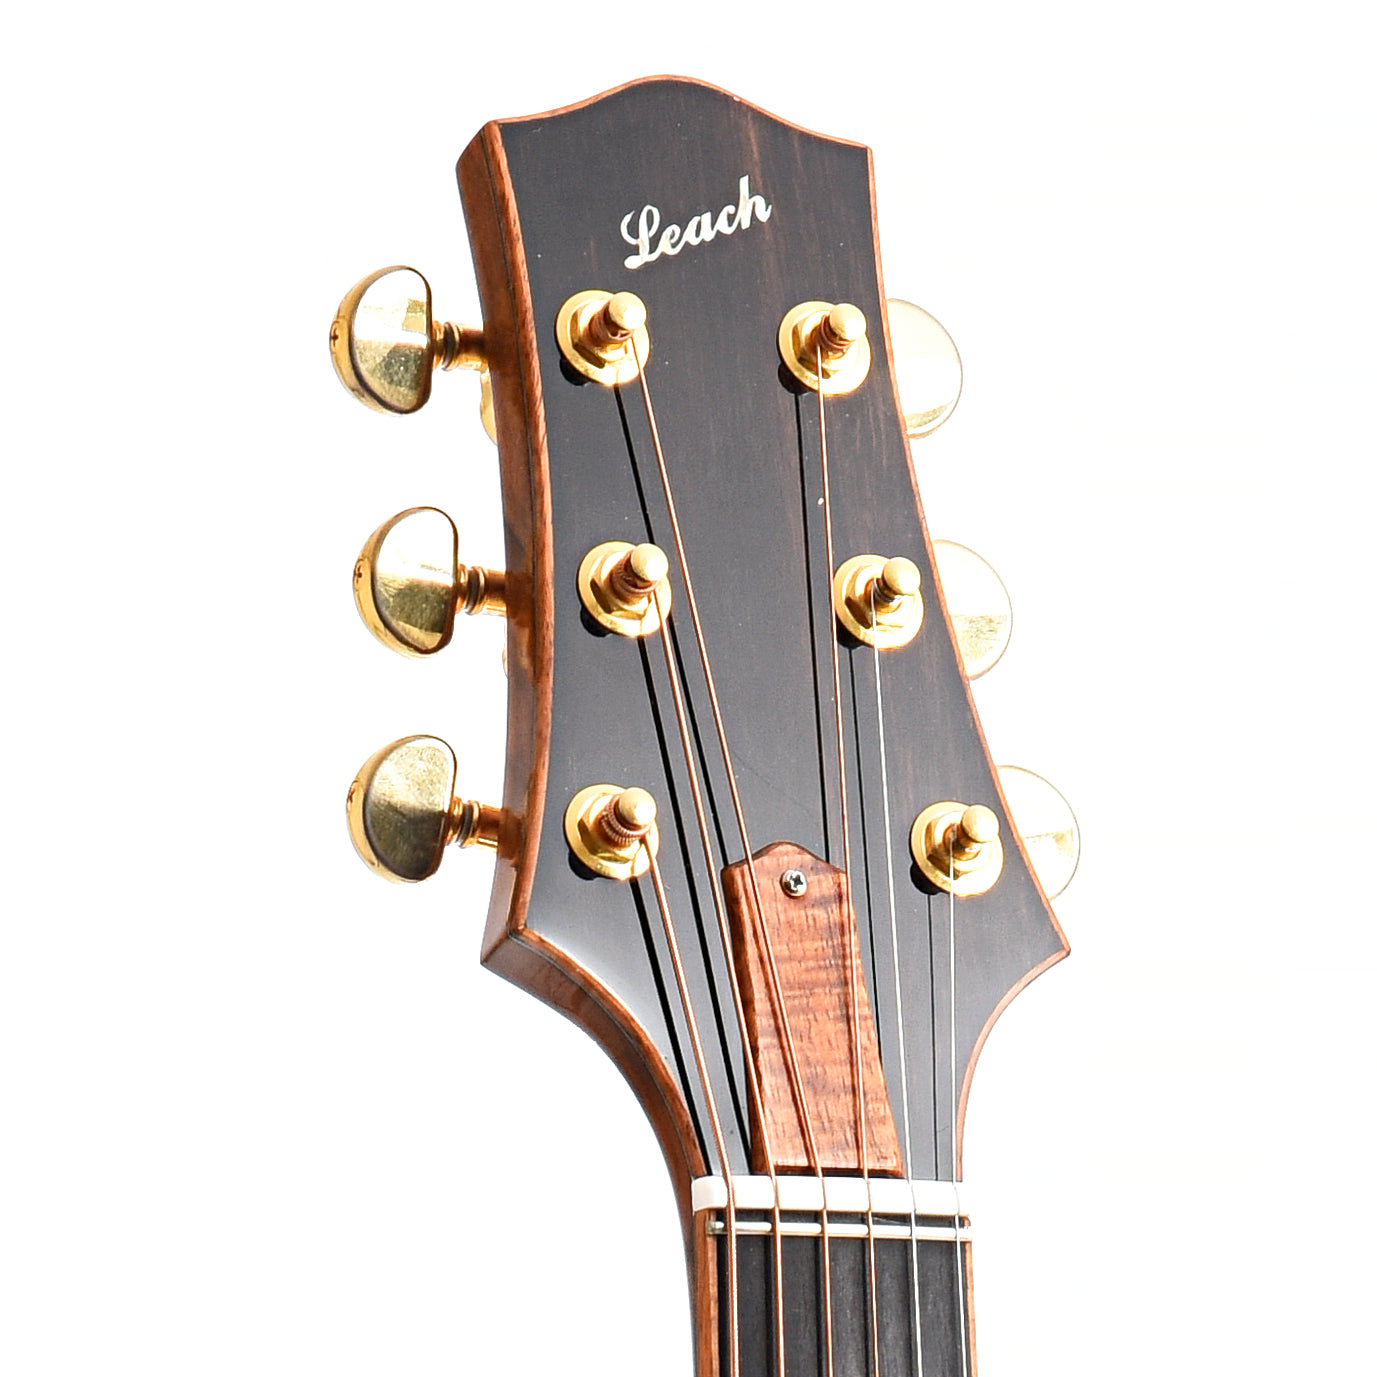 Image 9 of H.G. Leach "Kirby" Model (c.2002) - SKU# 20U-208177 : Product Type Flat-top Guitars : Elderly Instruments